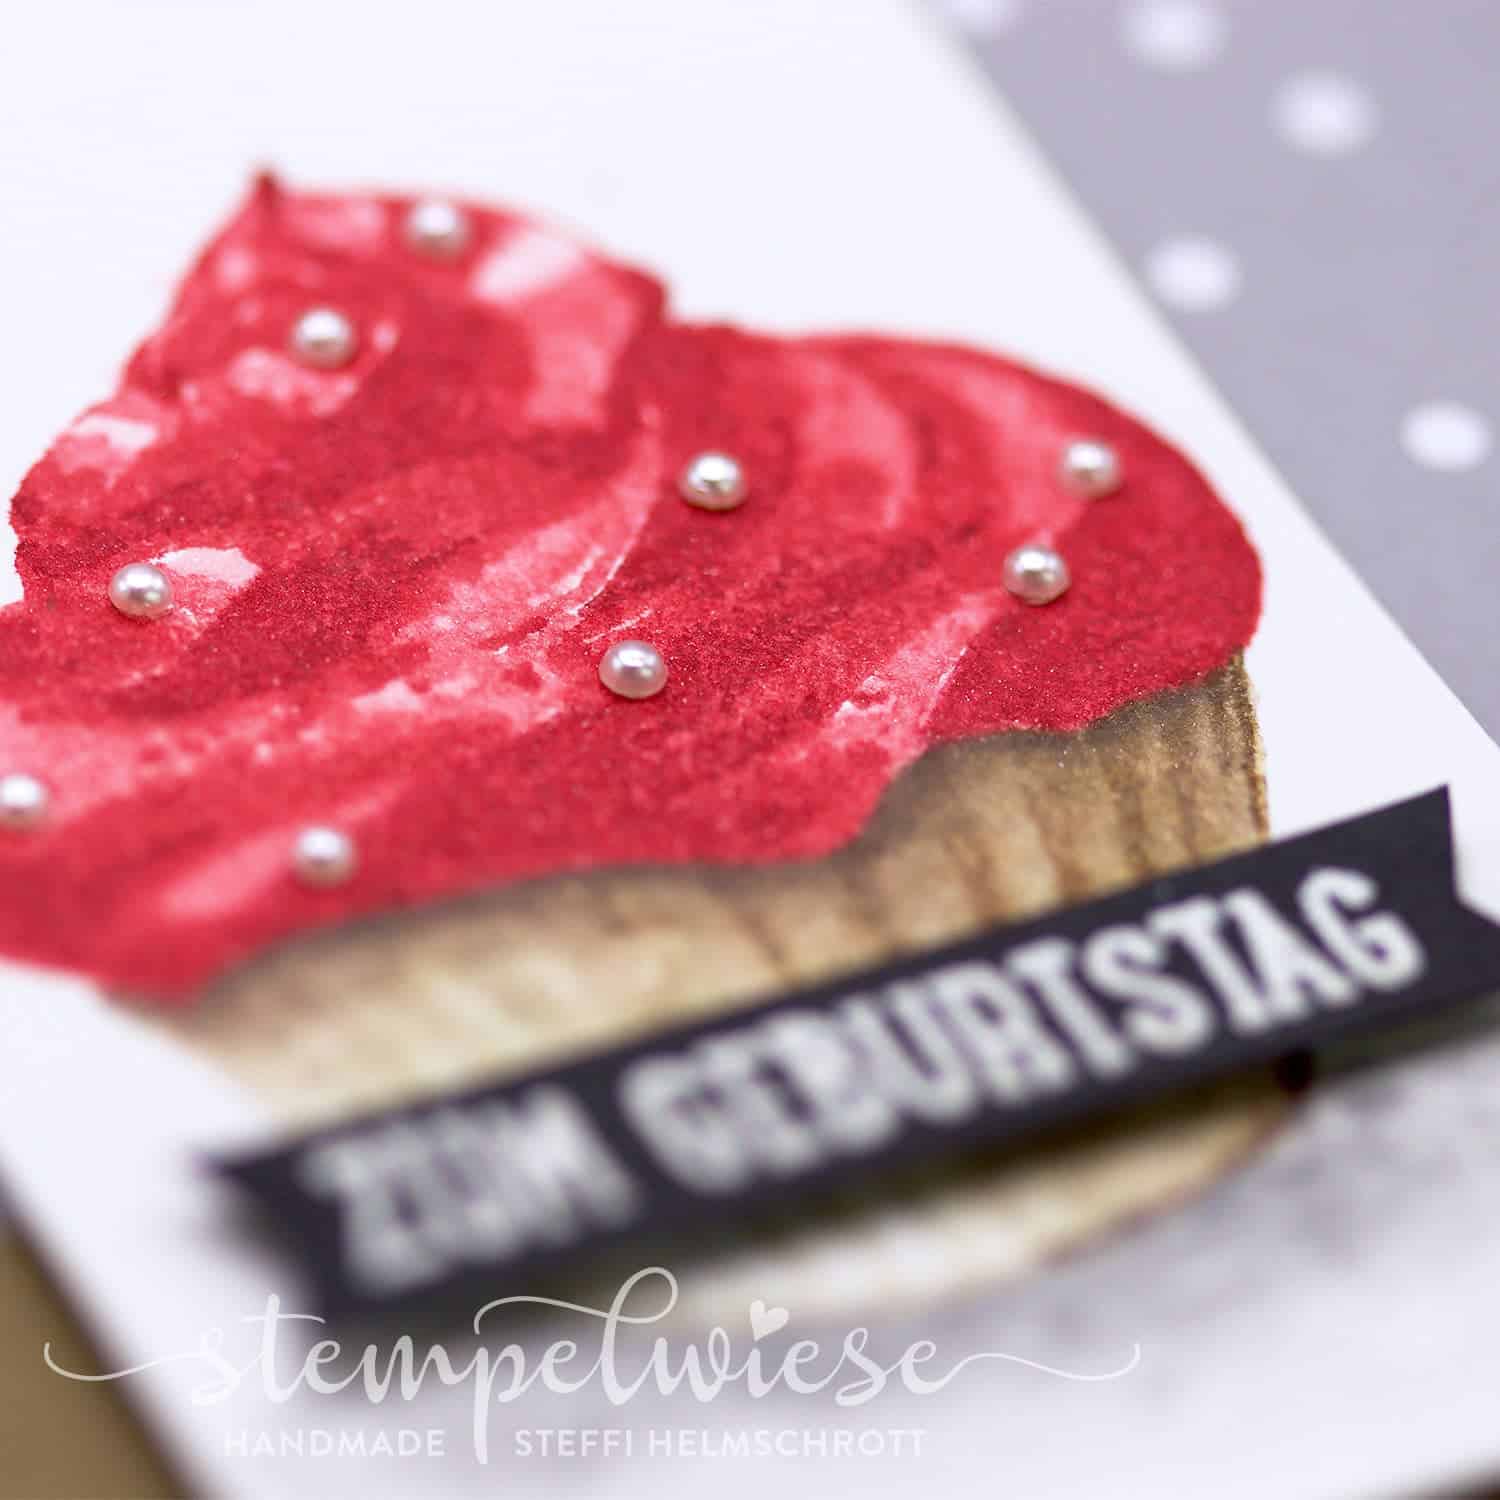 Geburtstagskarte mit Cupcake in Aquarell - Stampin’ Up! - Stempelwiese